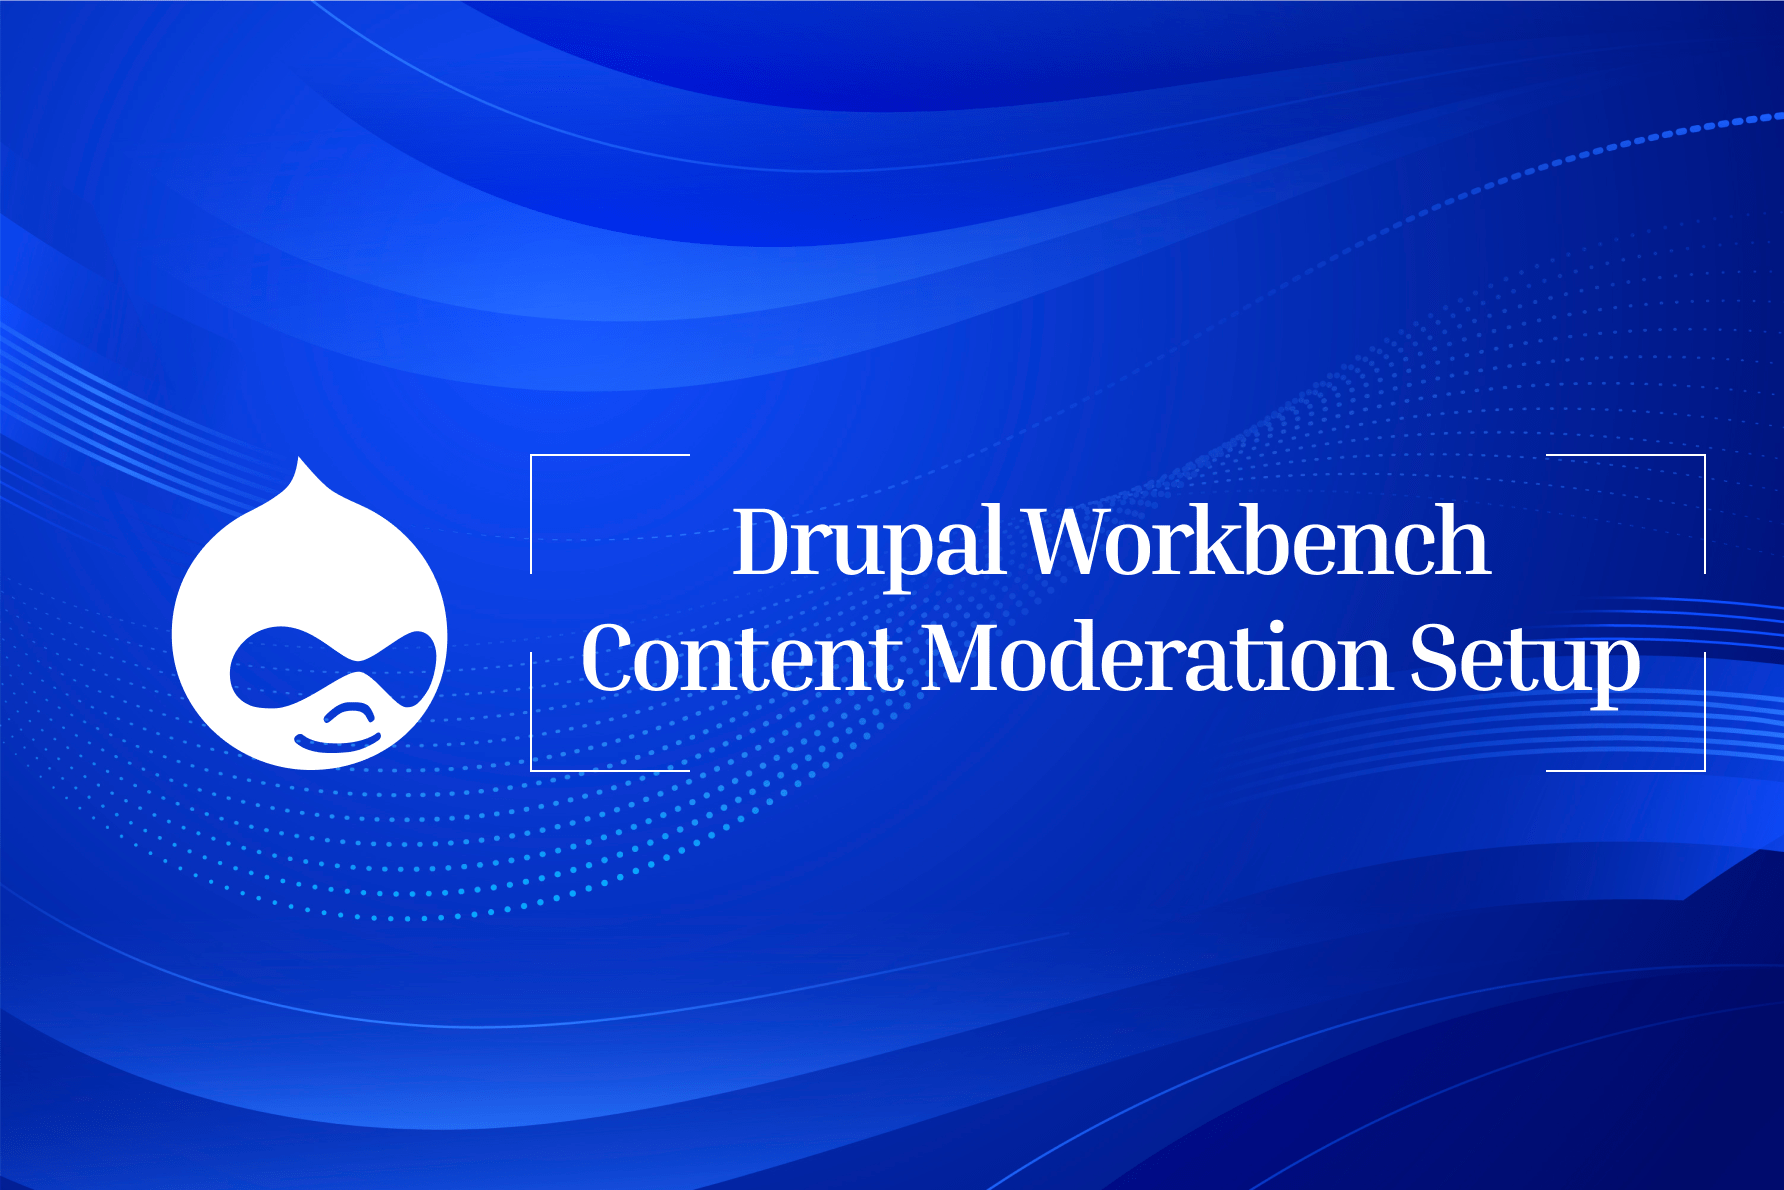 Drupal Workbench Content Moderation Setup